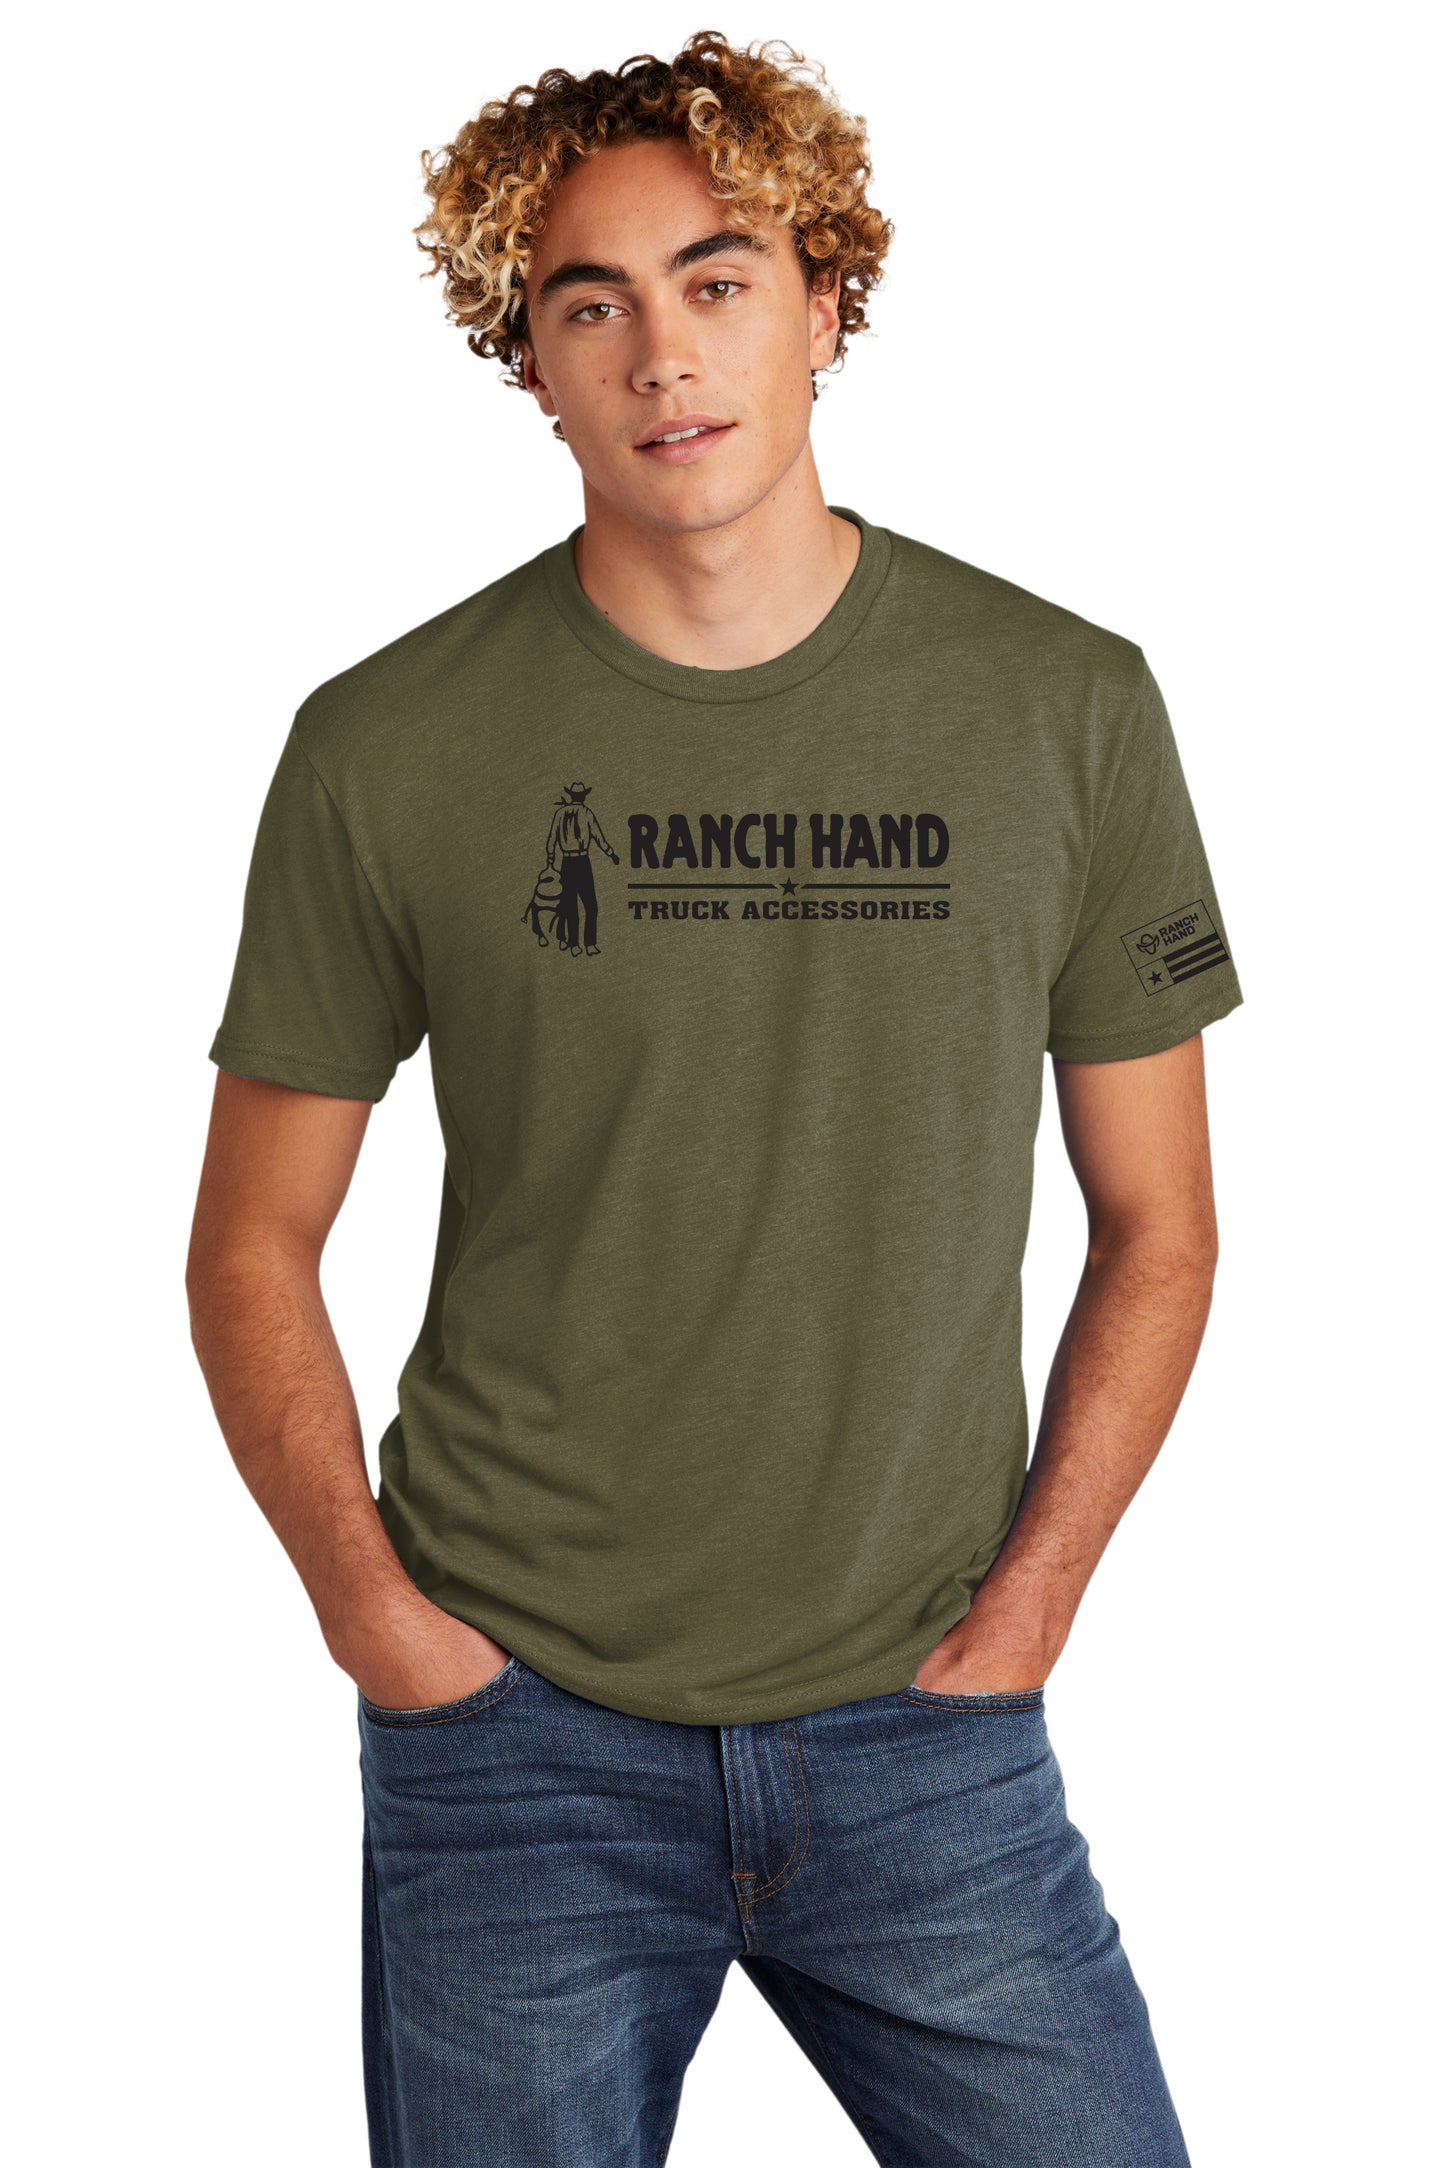 Ranch Hand Vintage Americana T-Shirt - Military Green